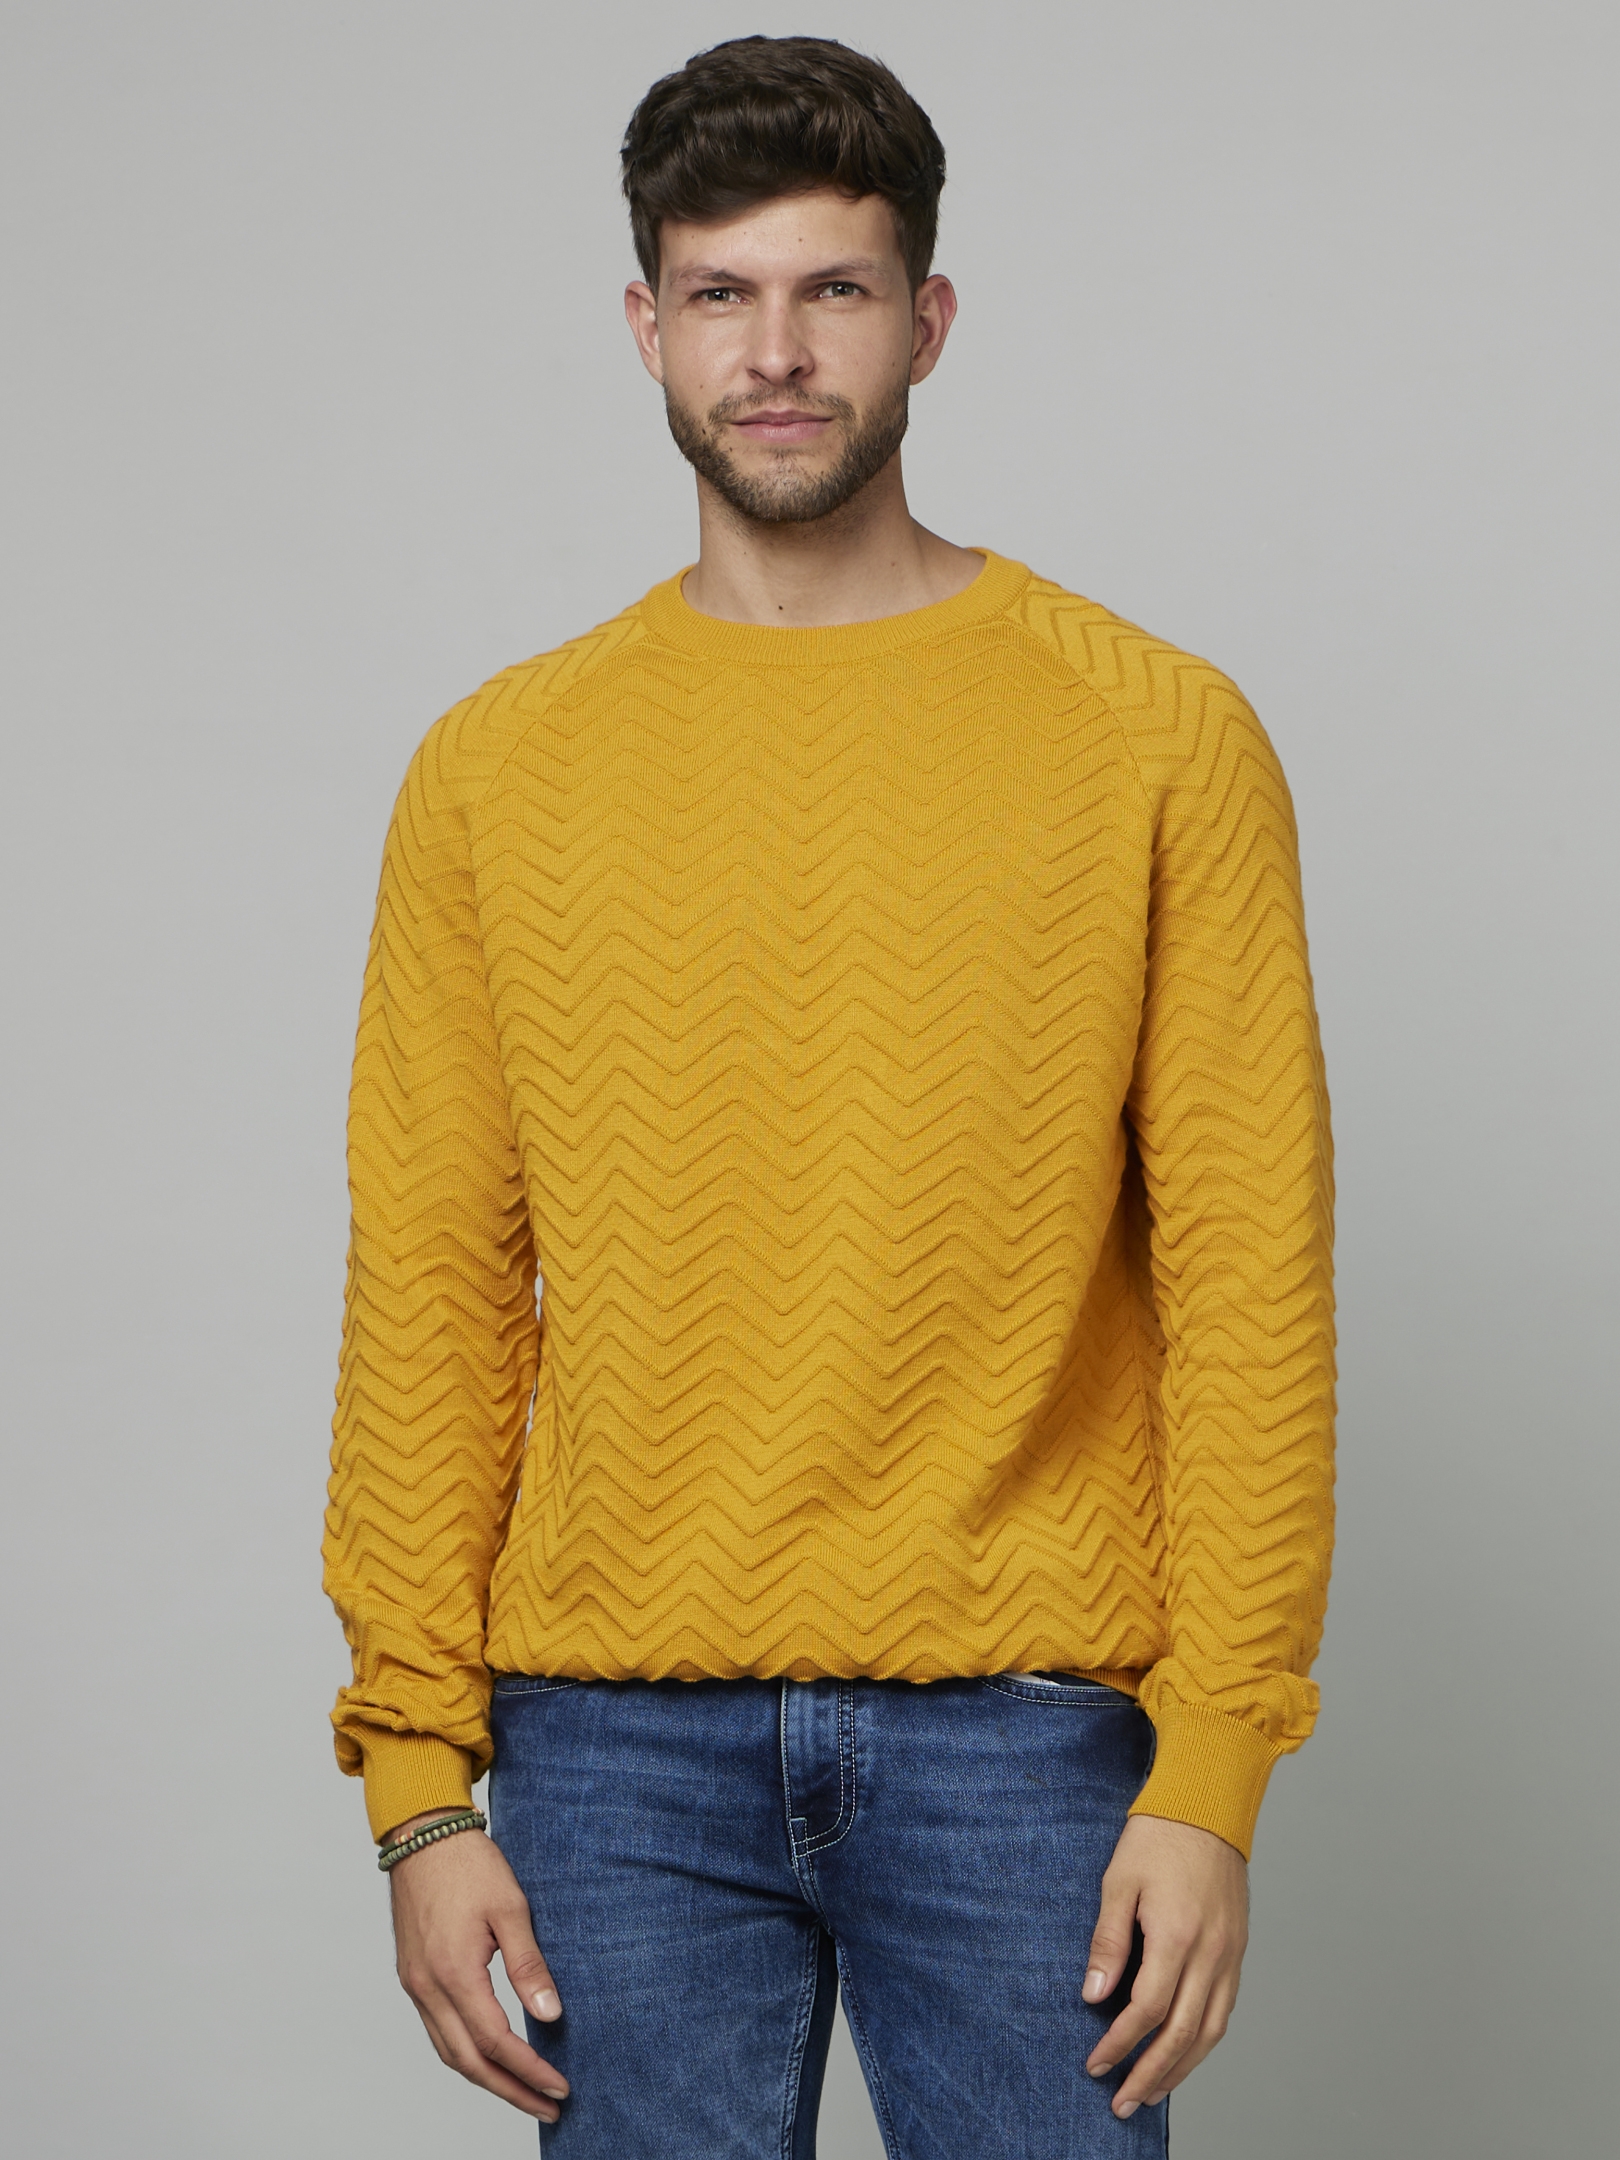 Men's Yellow Textured Sweaters